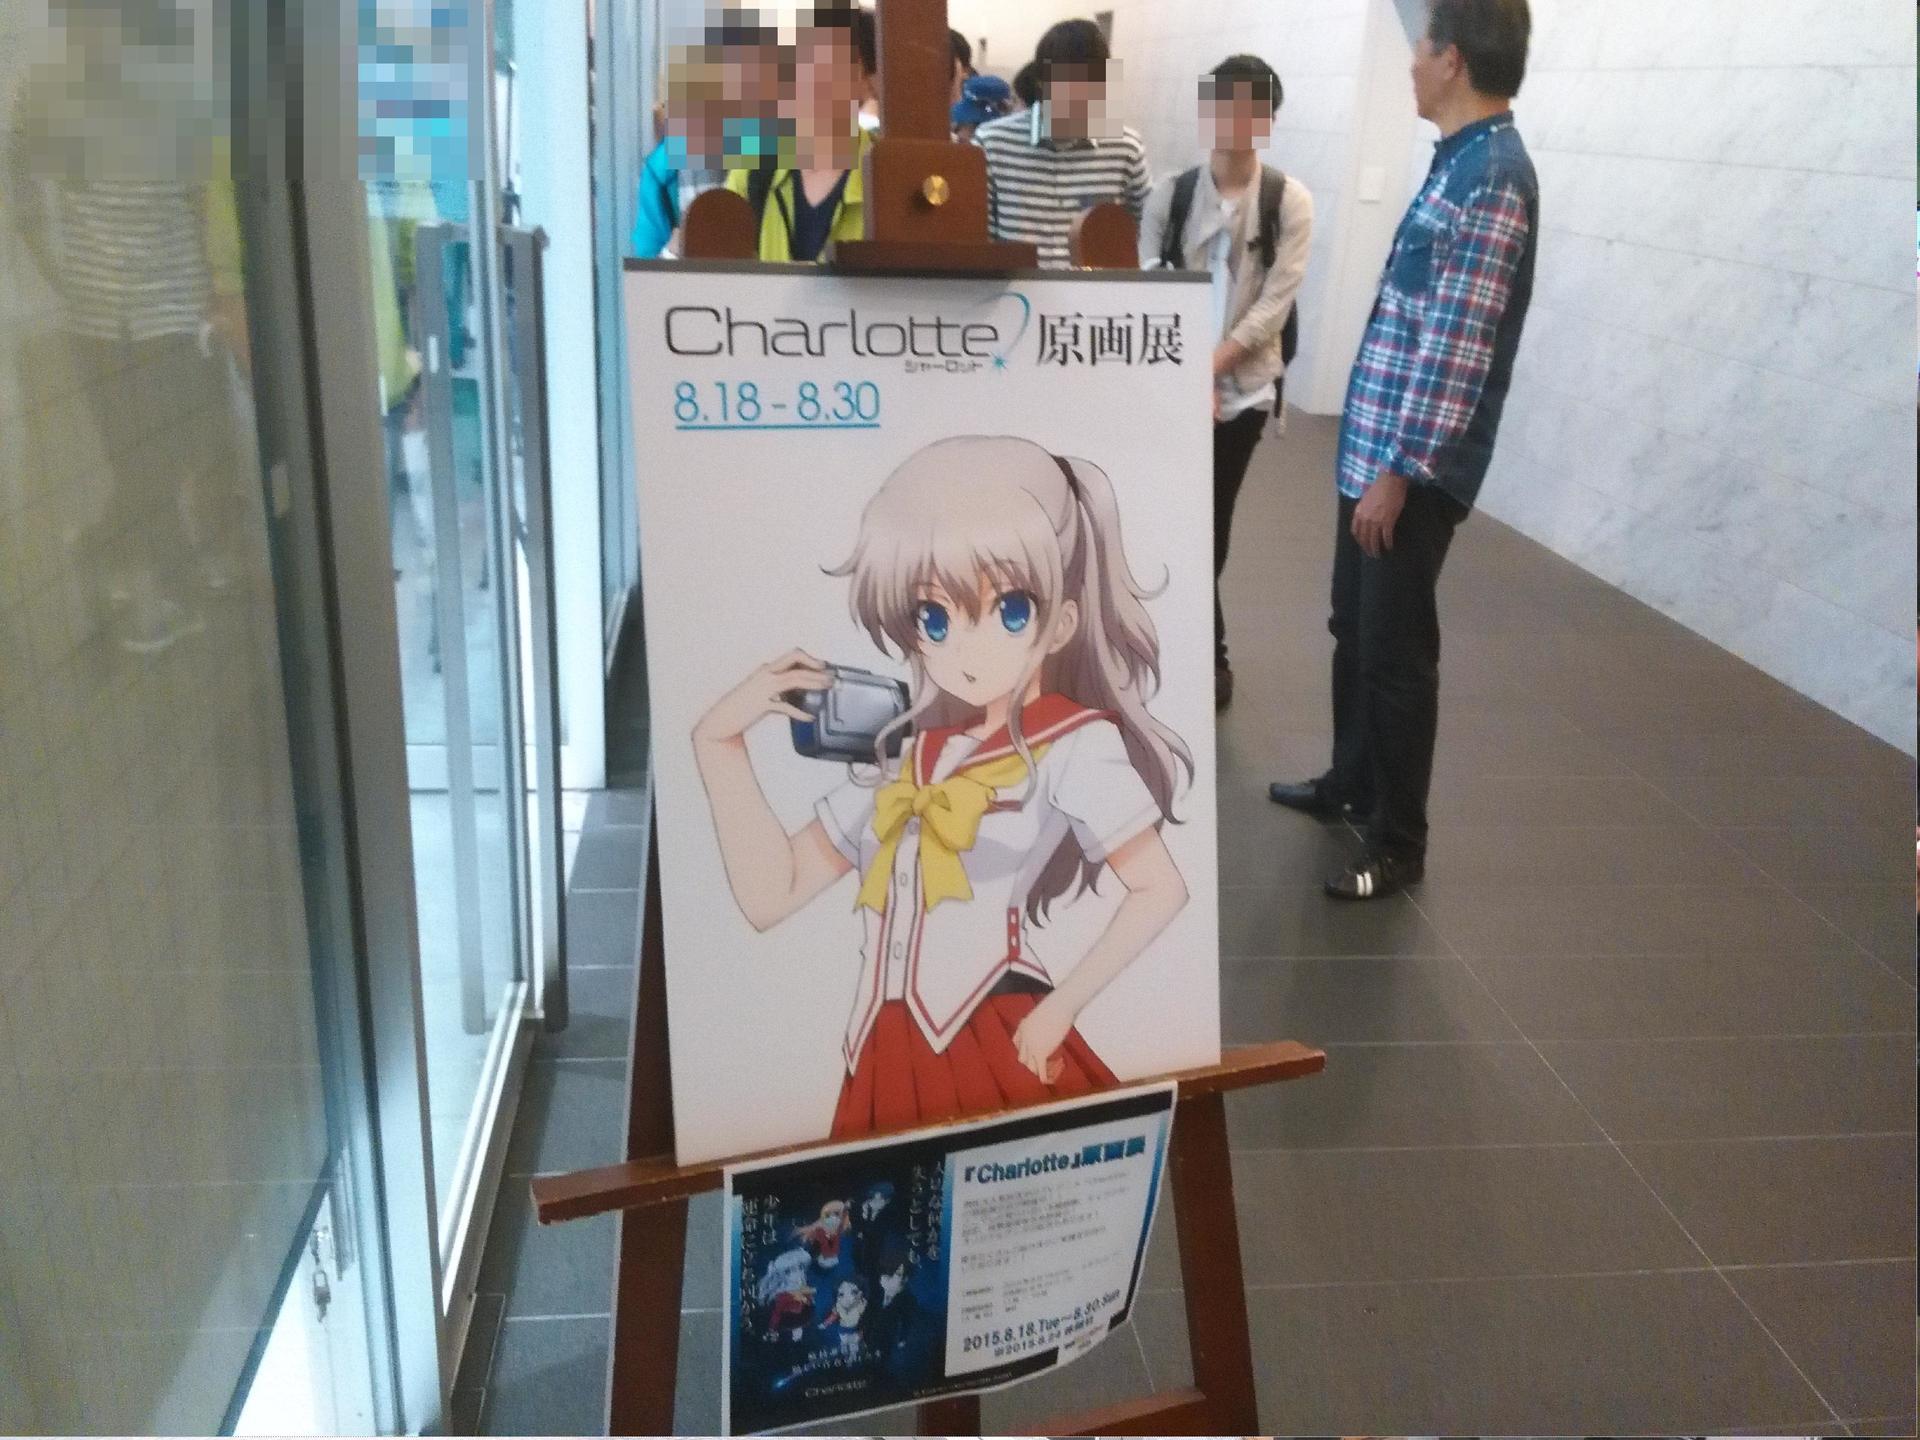 Charlotteの原画展 最終日 に行ってみた 東京アニメセンター アニメの館 仮